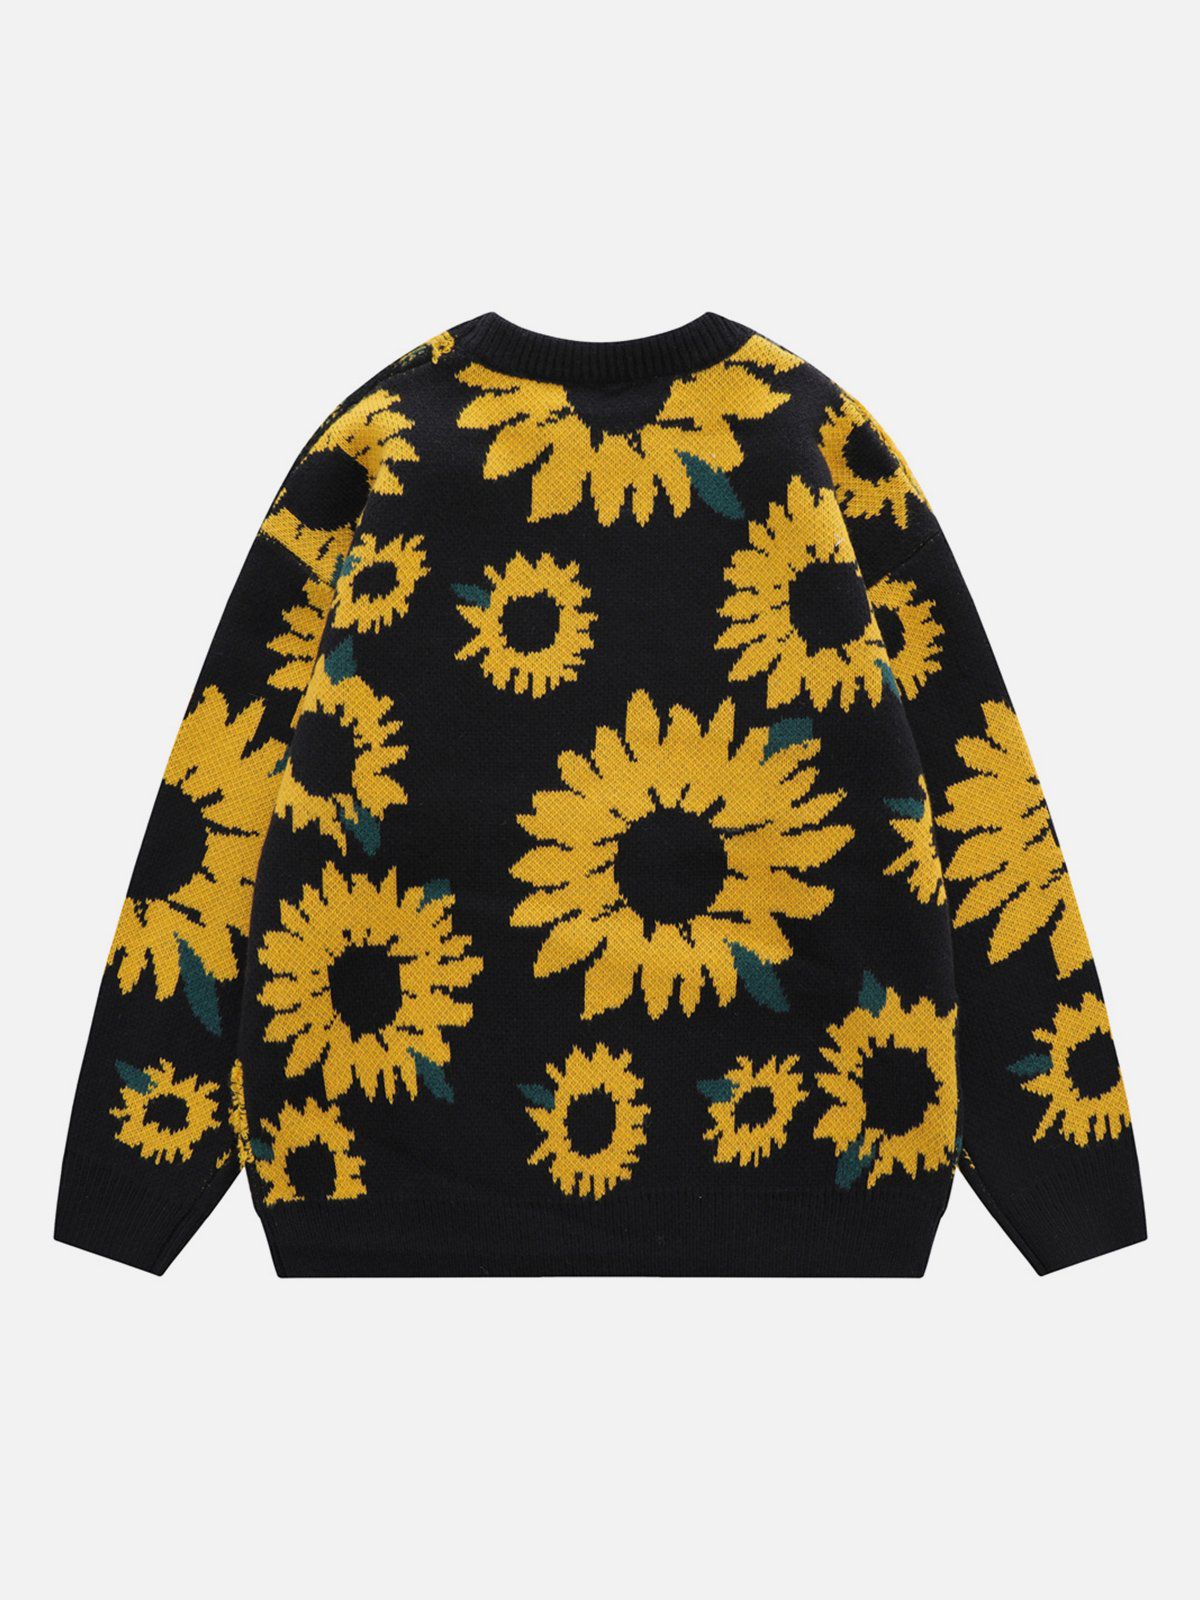 Aelfric Eden Sunflower Flocking Print Sweater @mouninaa